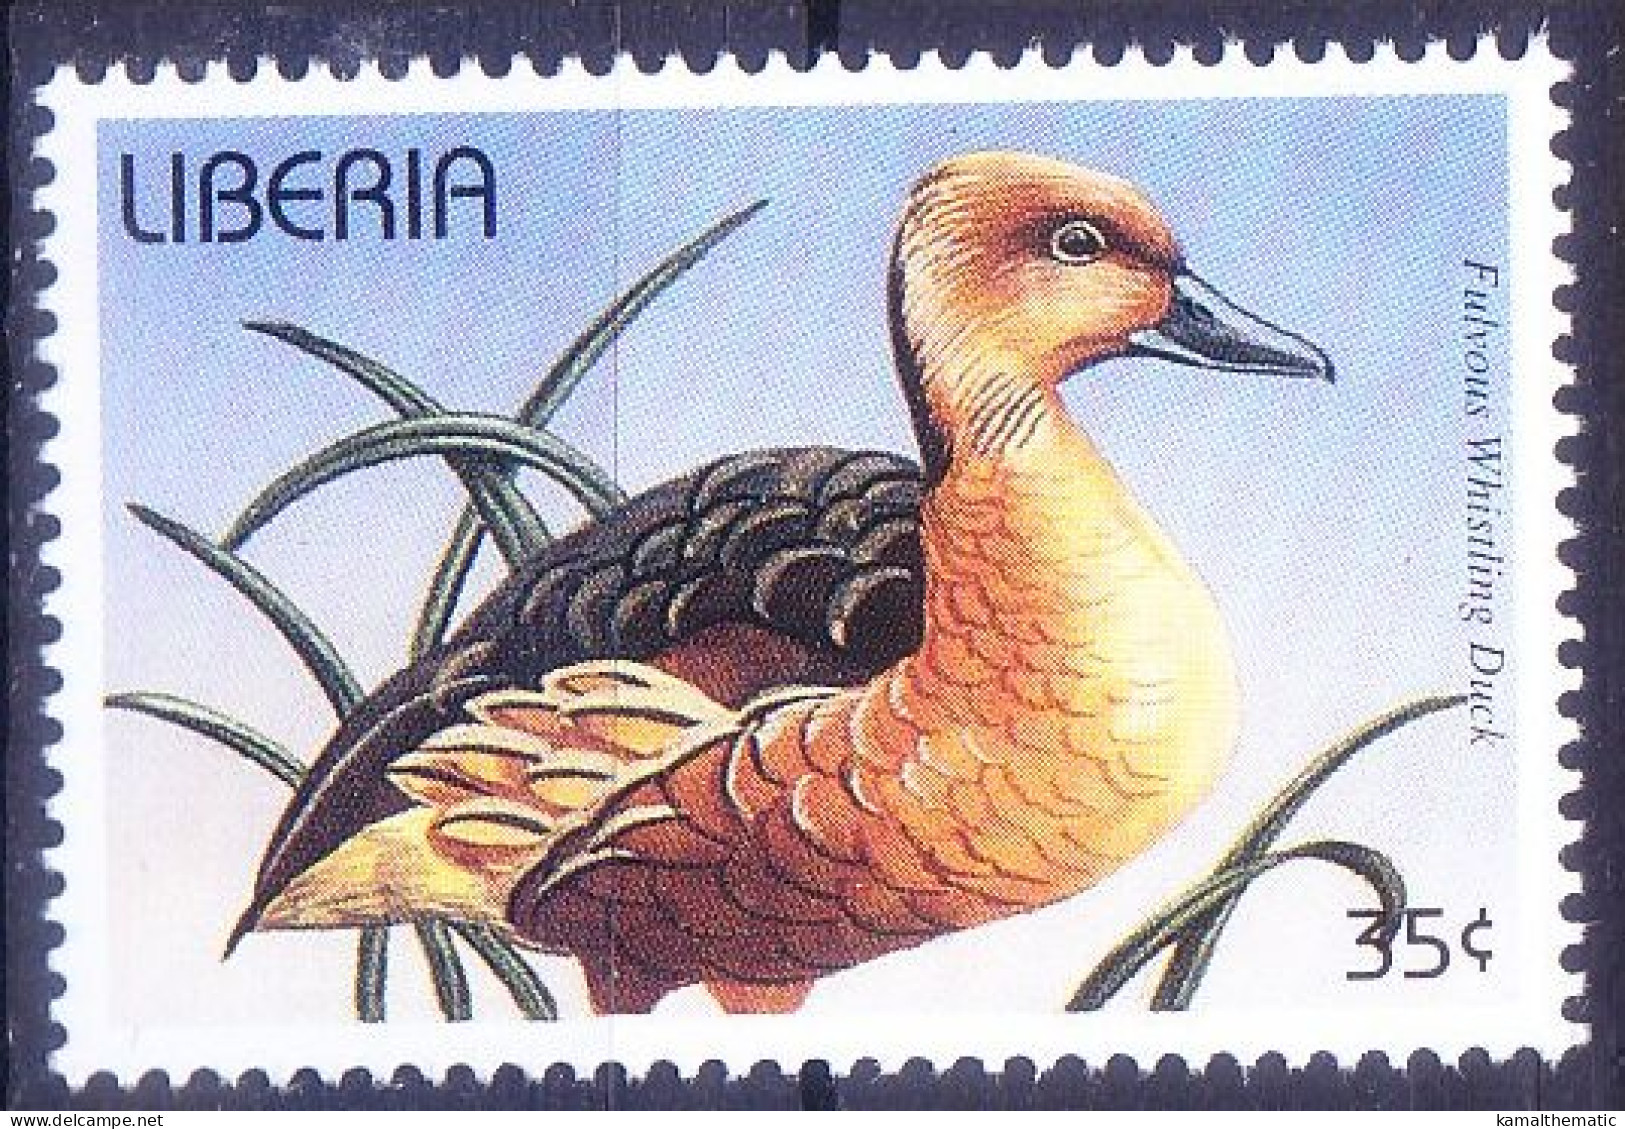 Fulvous Whistling Duck, Ducks, Water Birds, Liberia 1996 MNH - Ducks